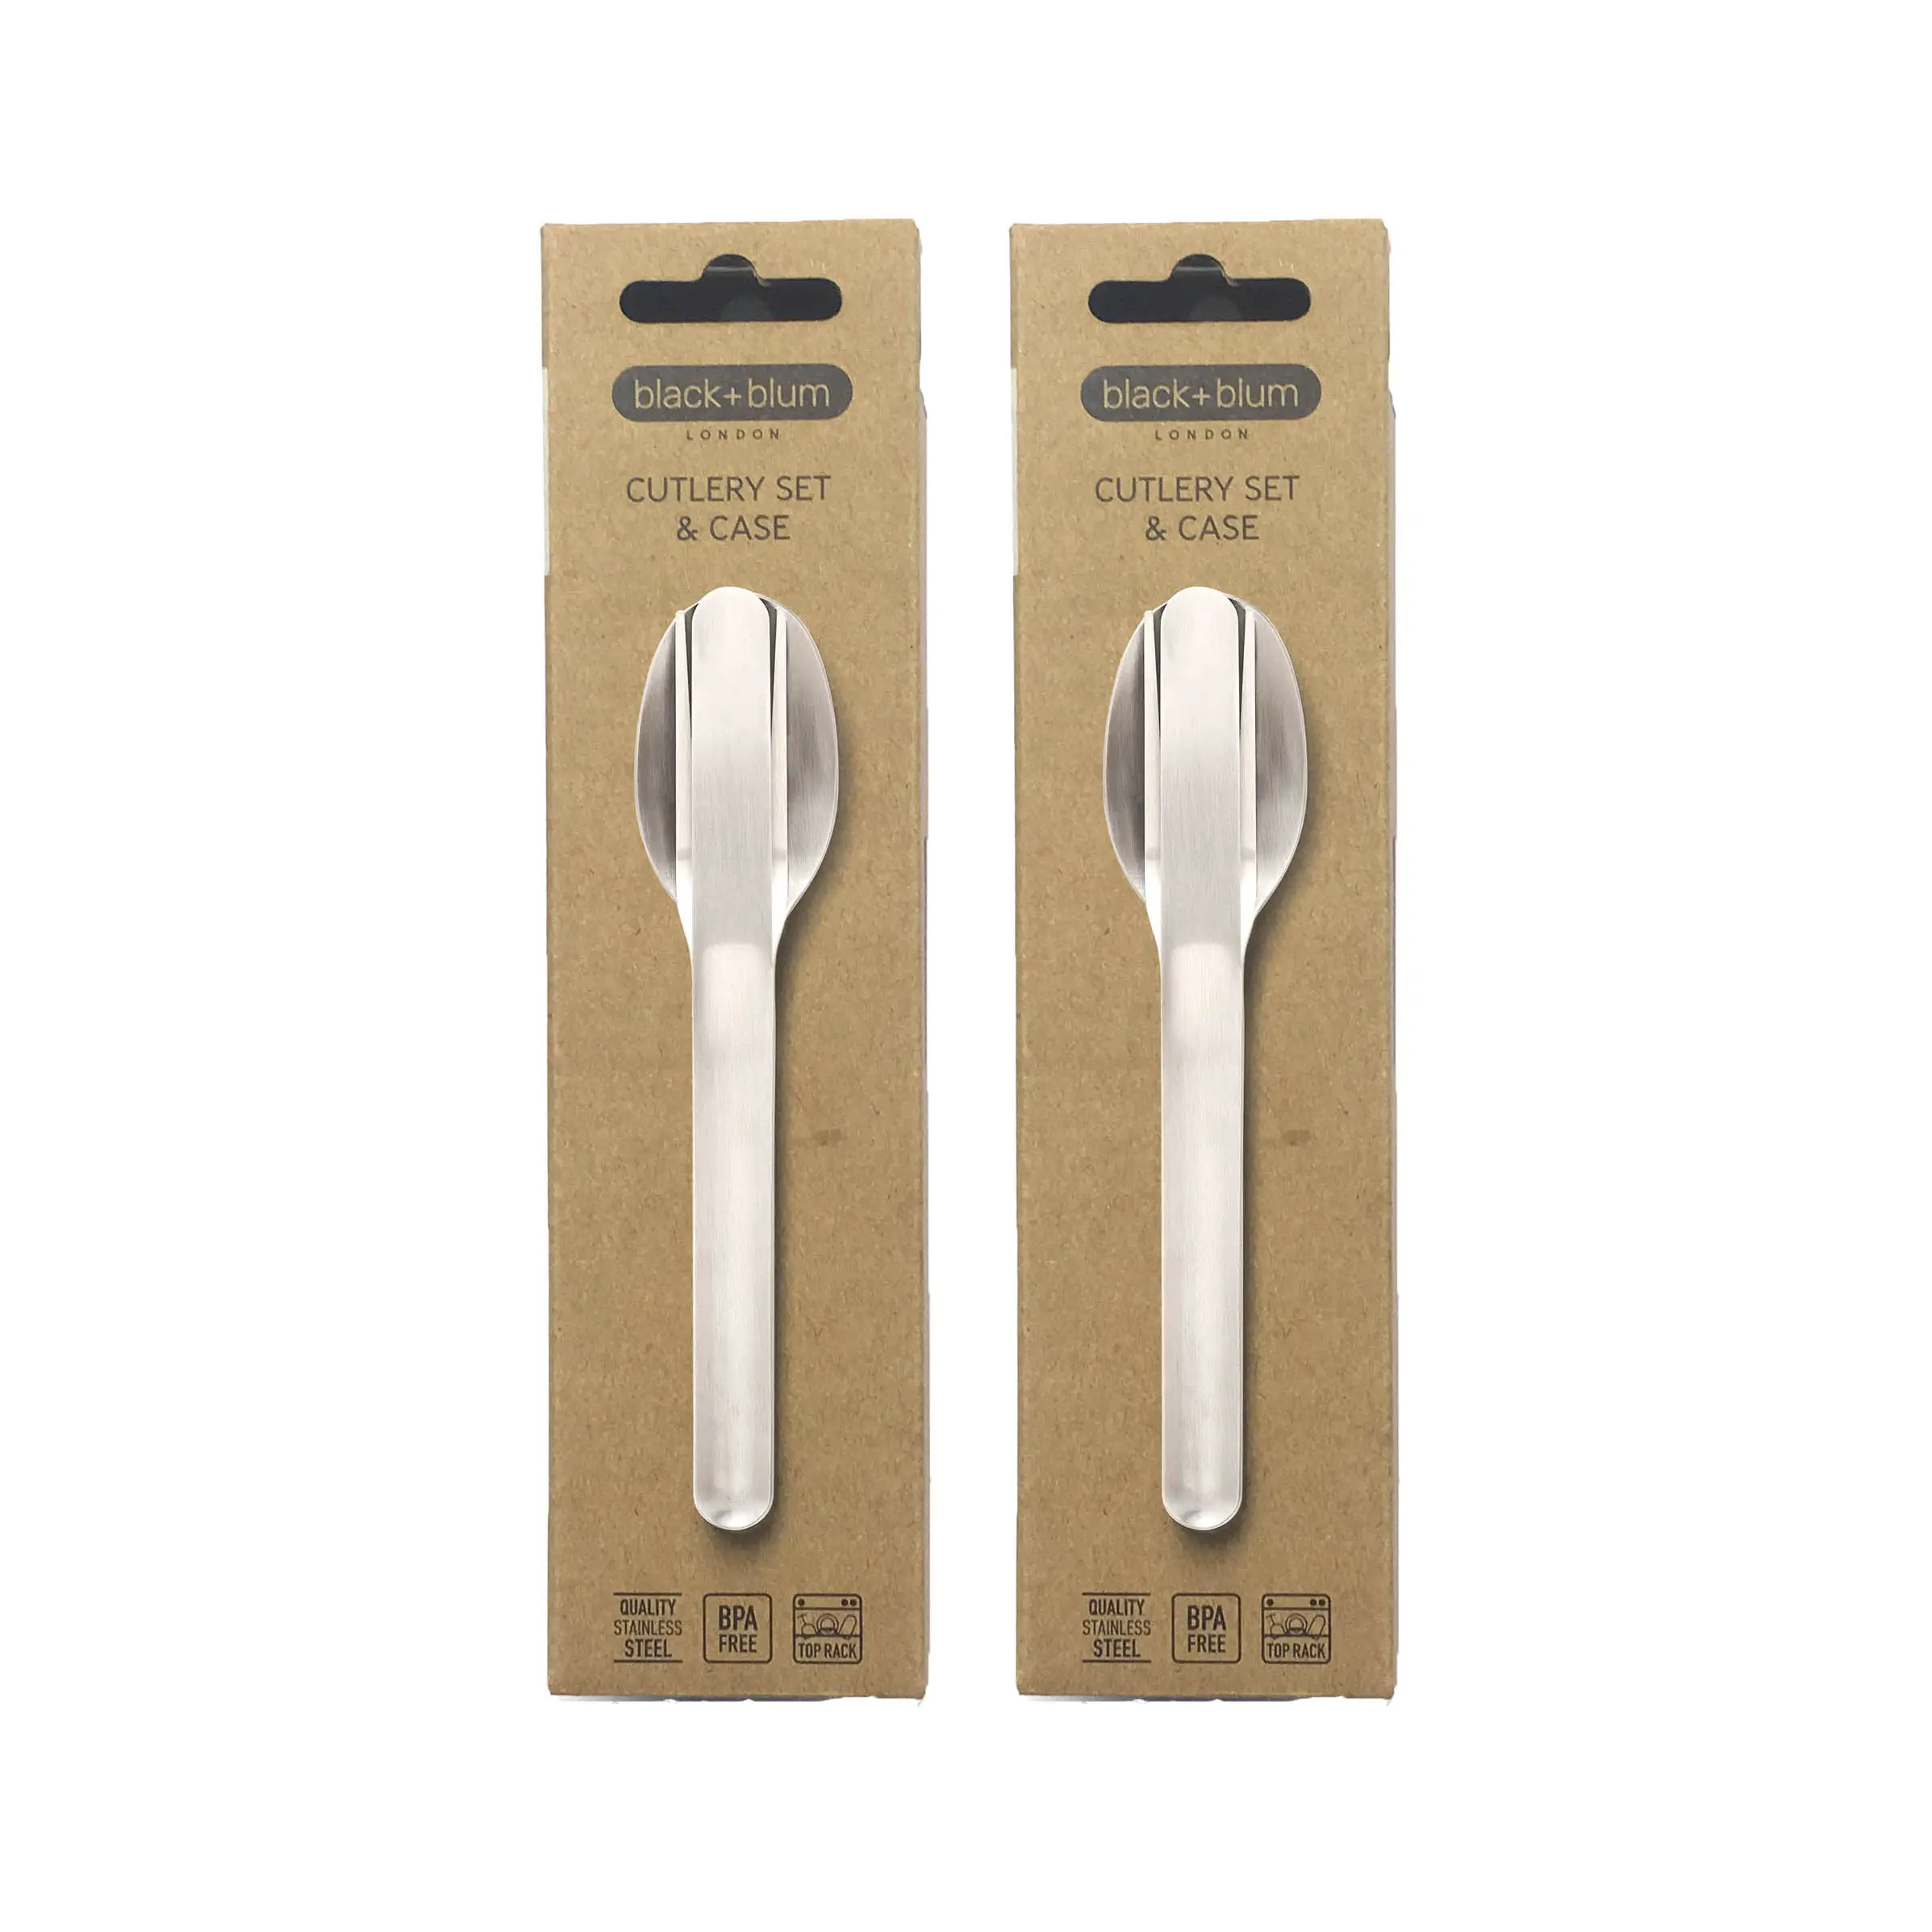 https://www.greenerlyfe.com/wp-content/uploads/2022/03/stainless-steel-travel-cutlery-set-2-pack.jpg